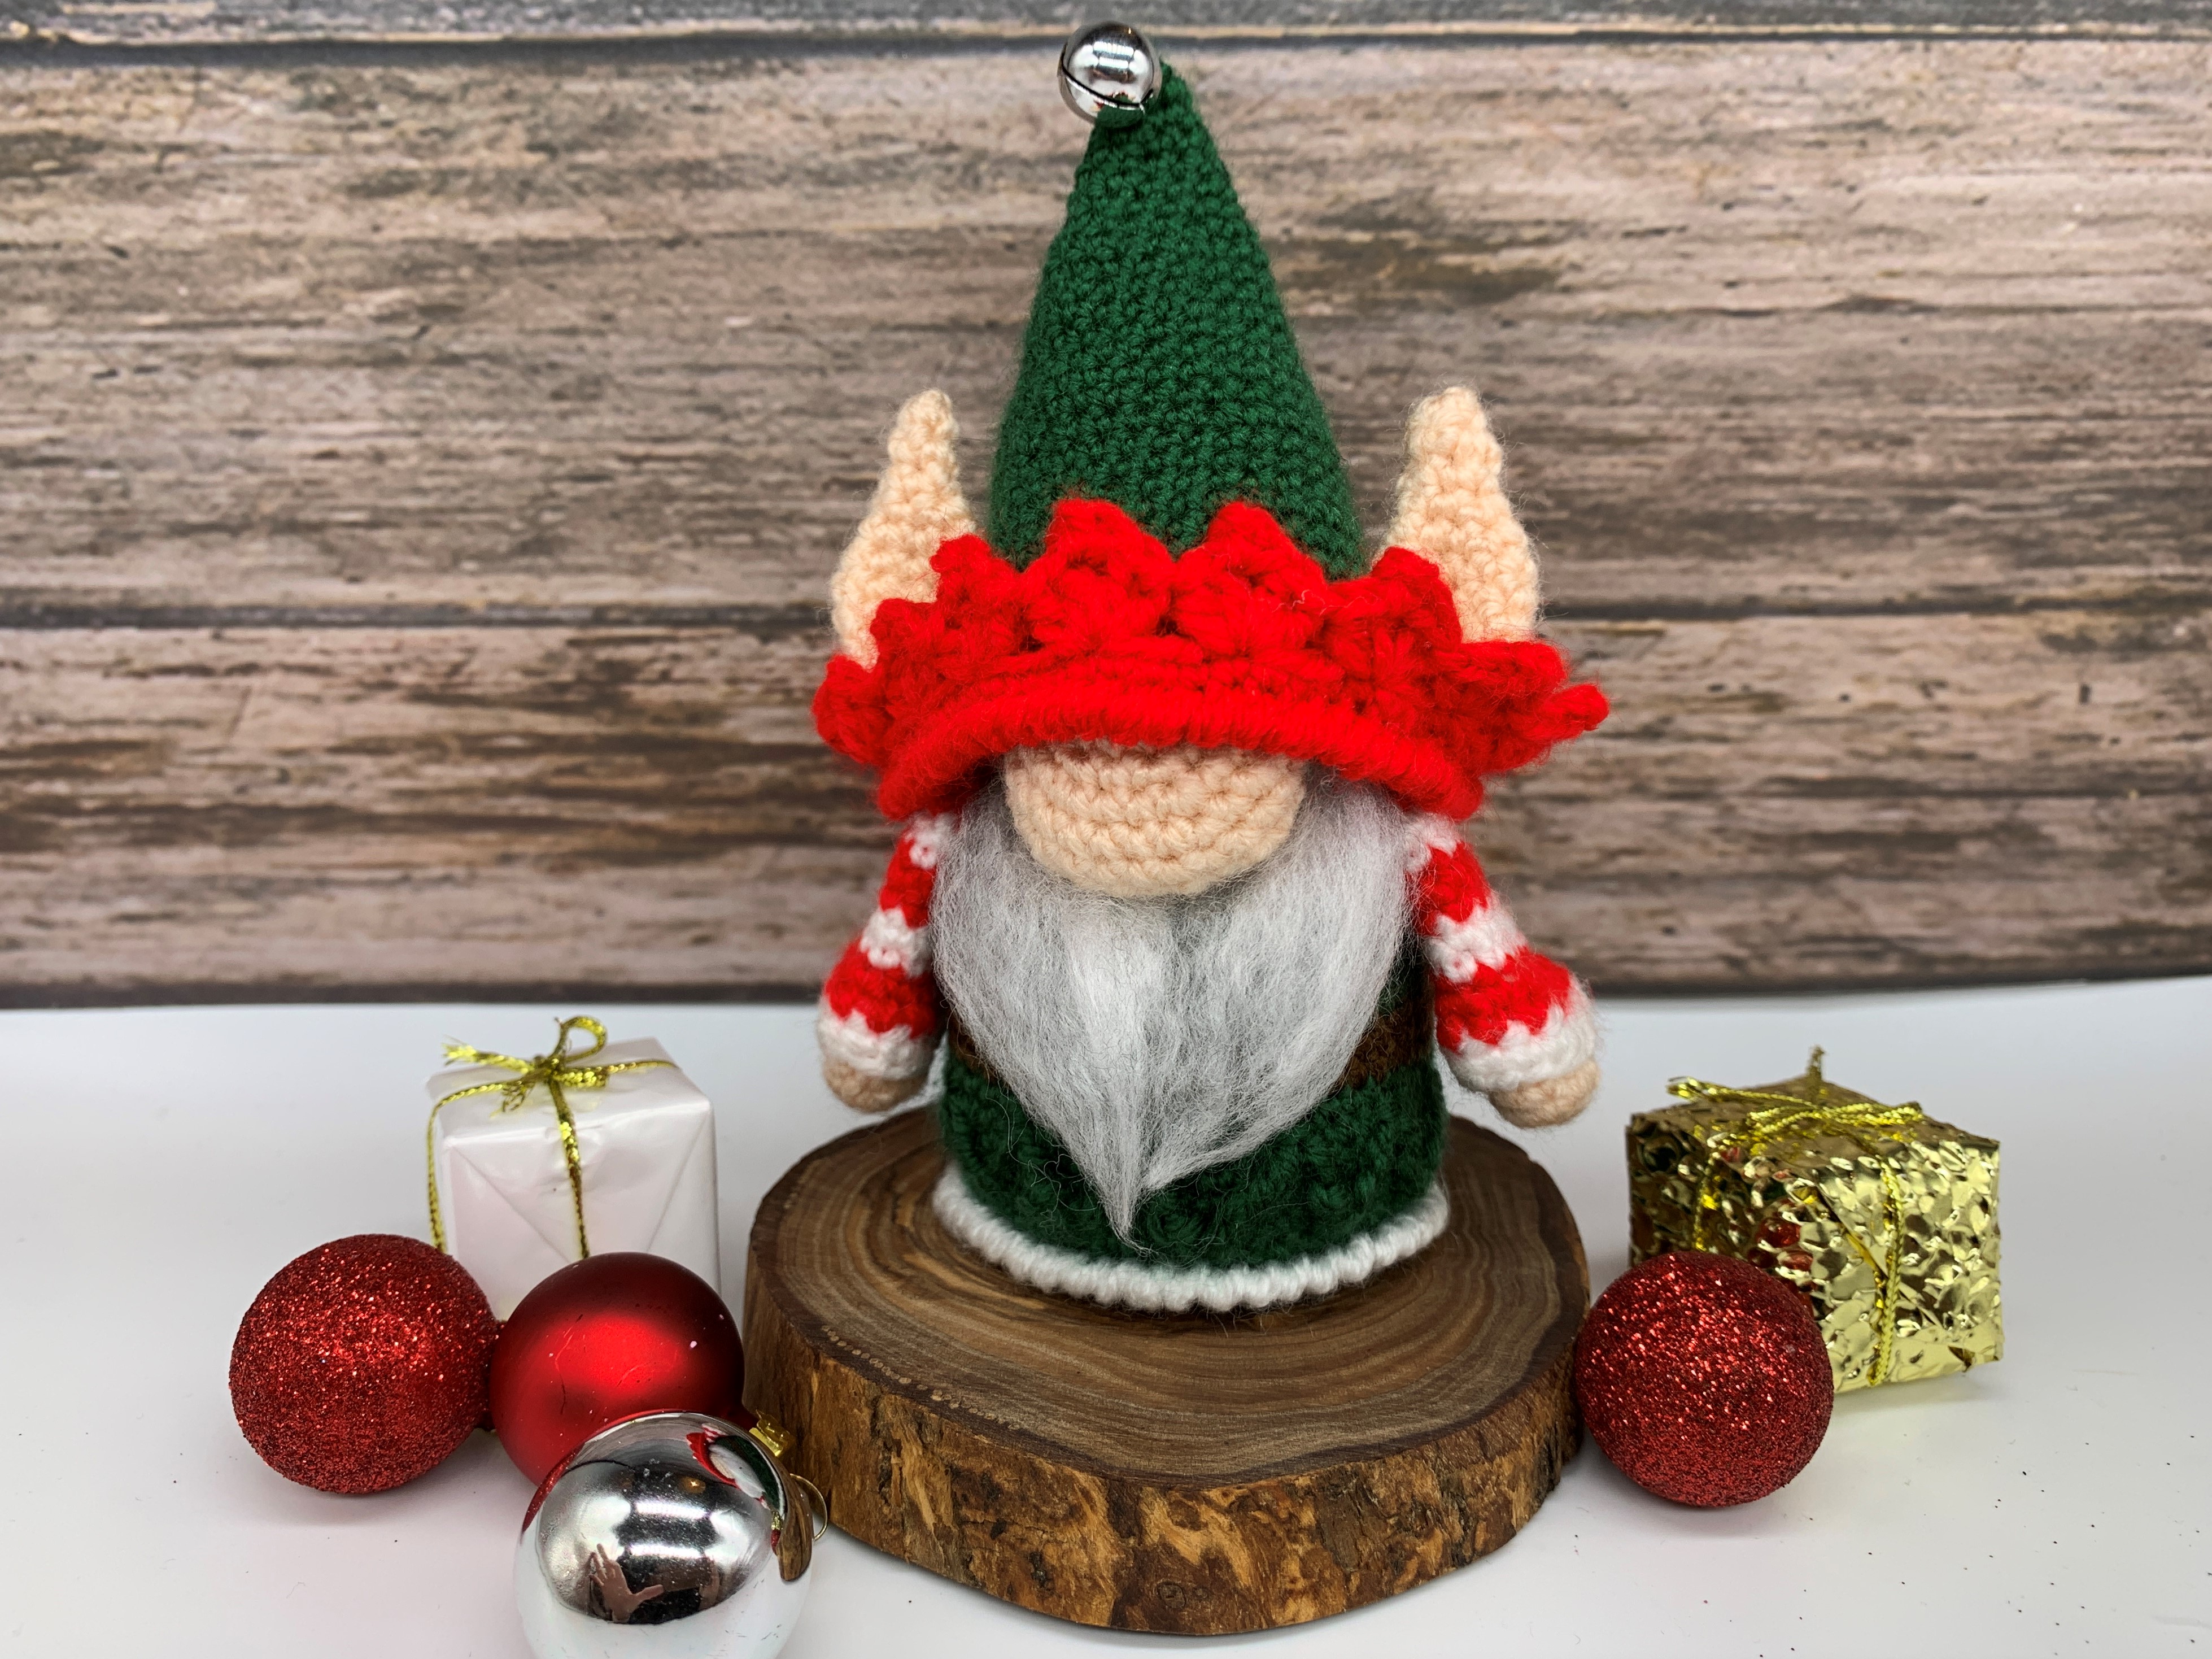 Crochet Kit for Beginners kids Adults - Christmas Gnome Amigurumi